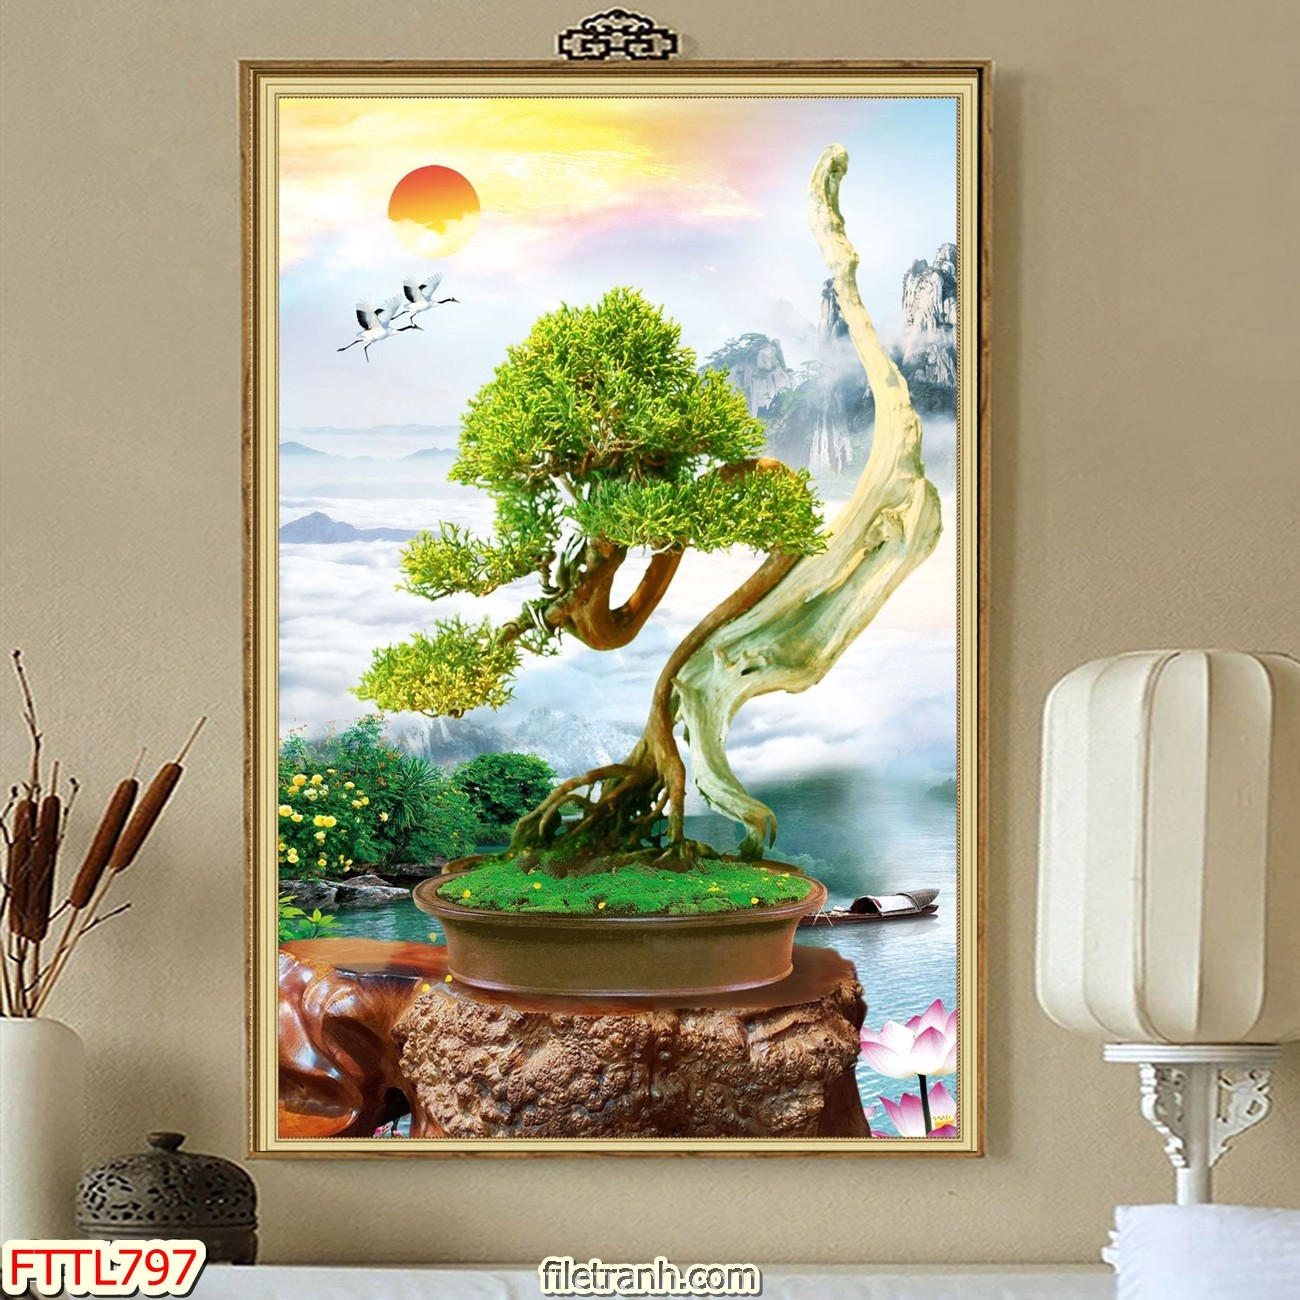 https://filetranh.com/file-tranh-chau-mai-bonsai/file-tranh-chau-mai-bonsai-fttl797.html